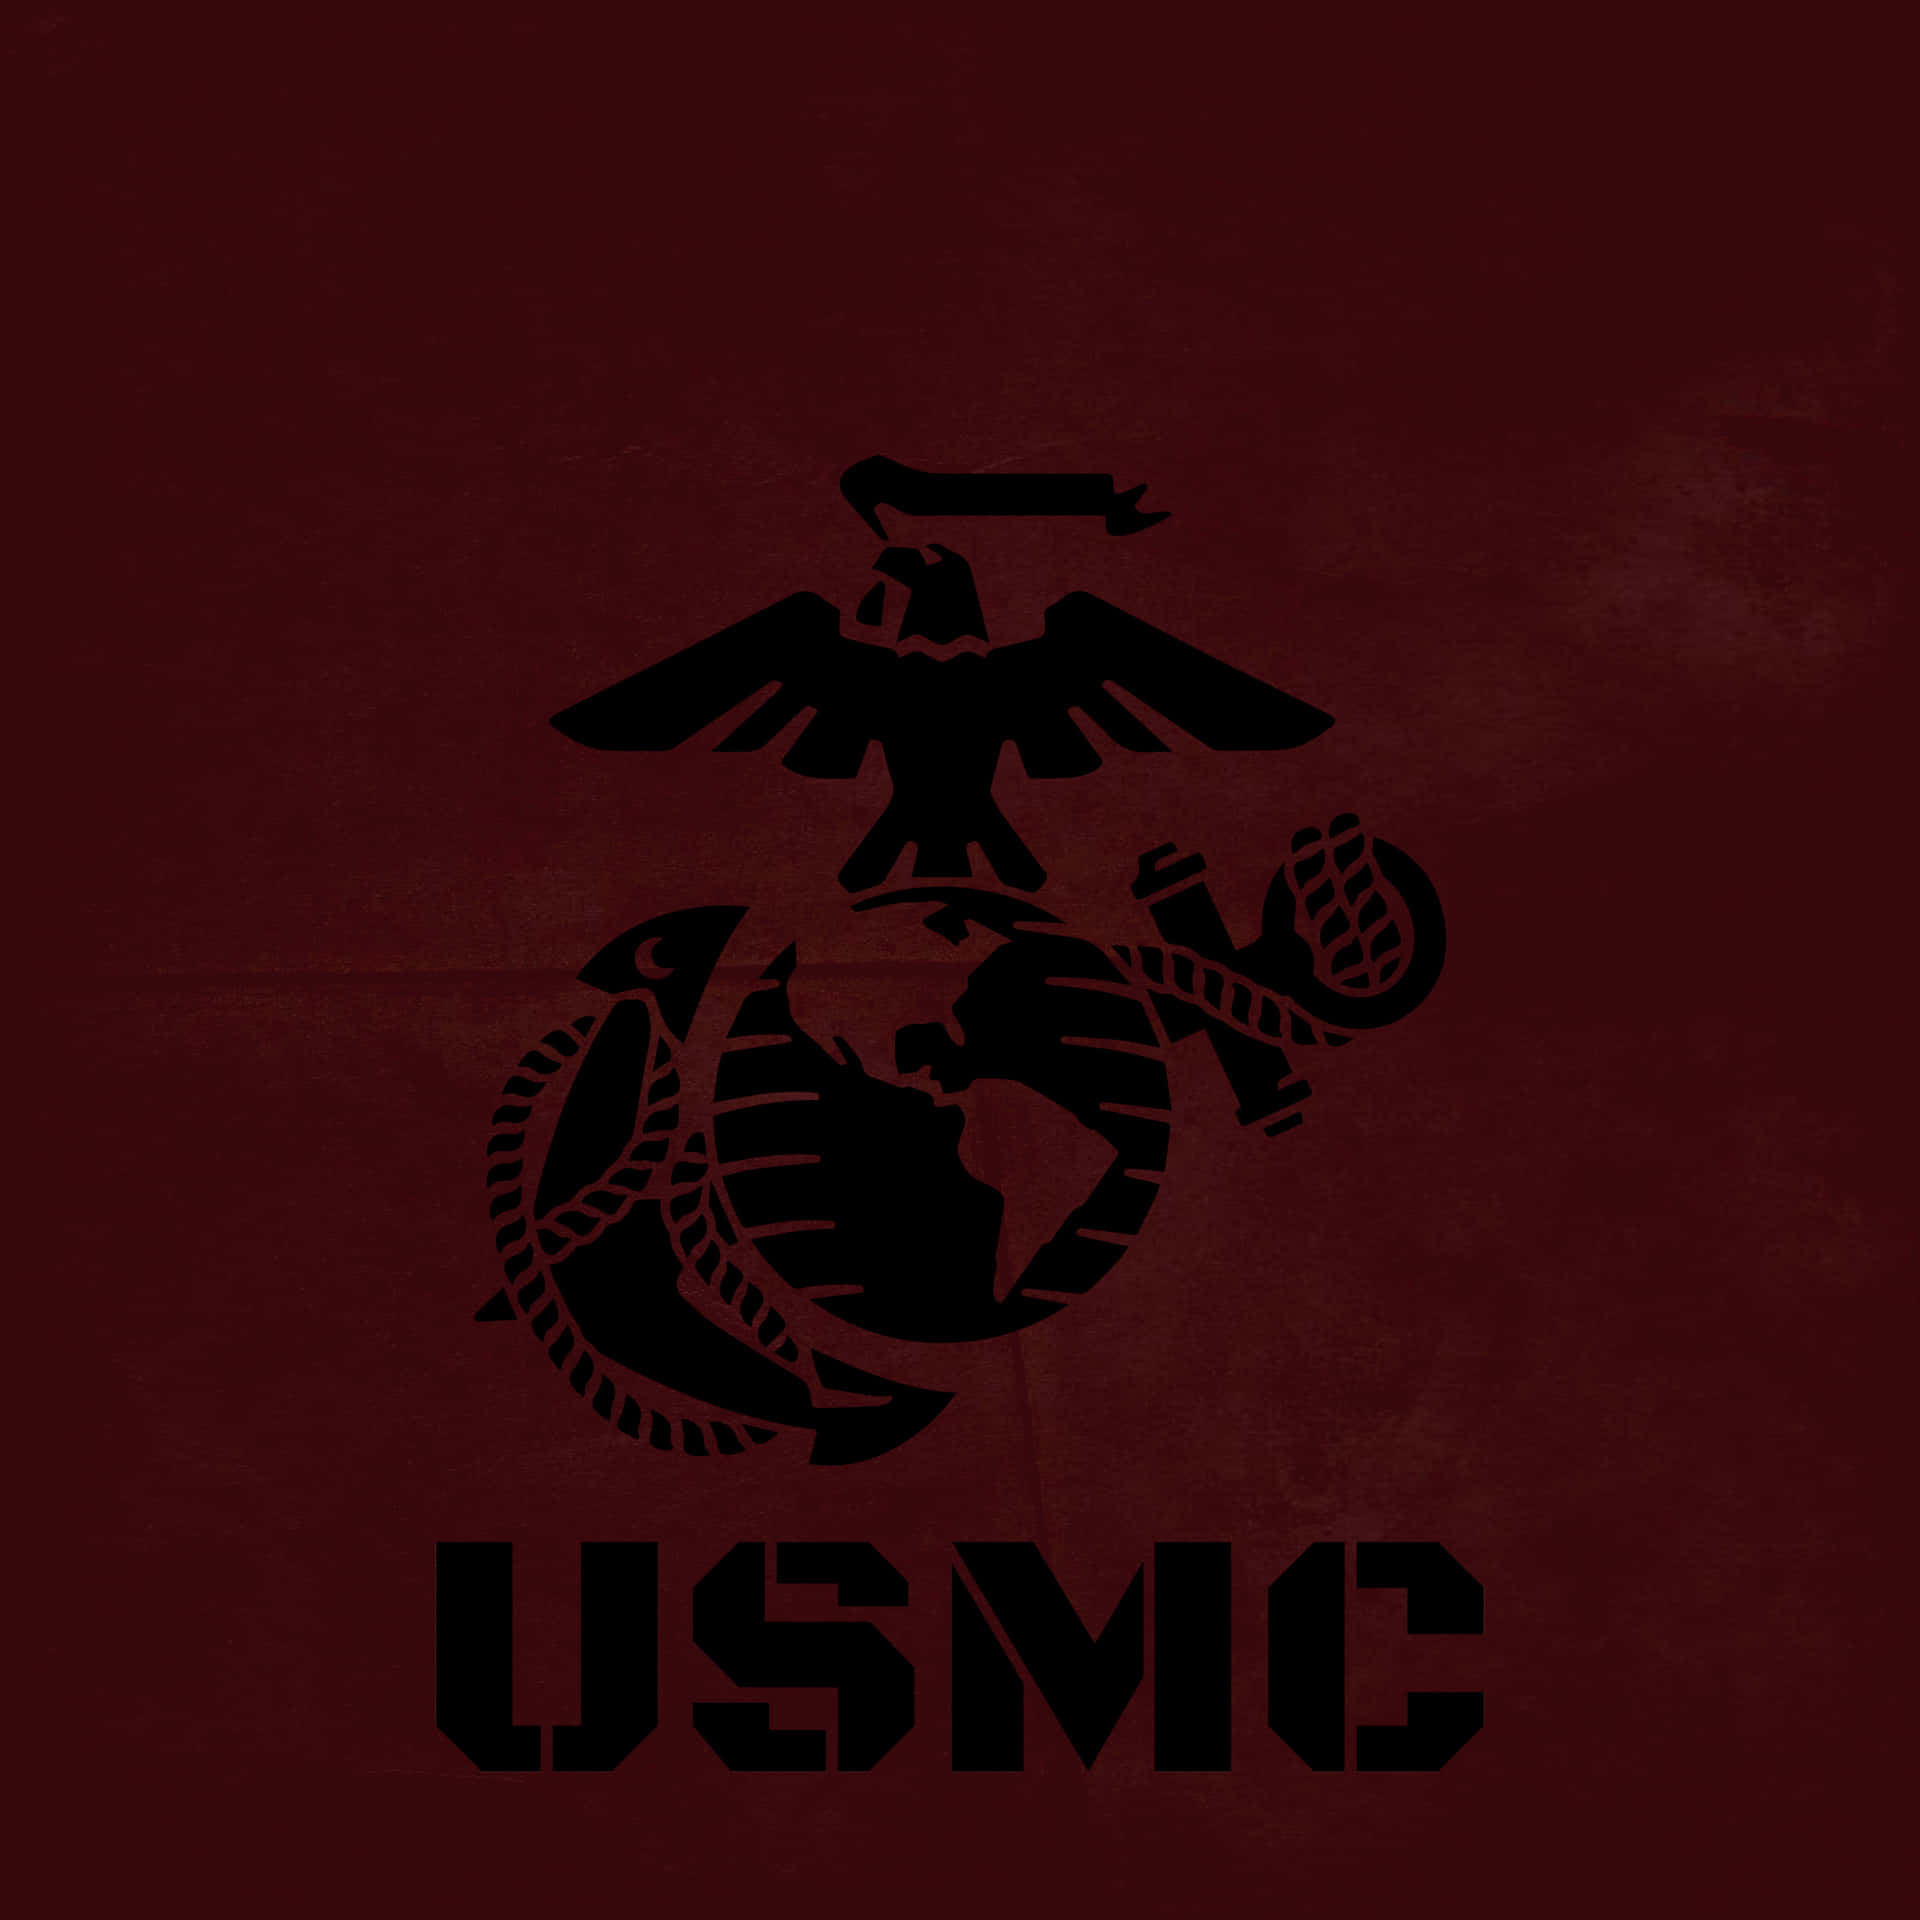 United States Marines, Semper Fi! Wallpaper